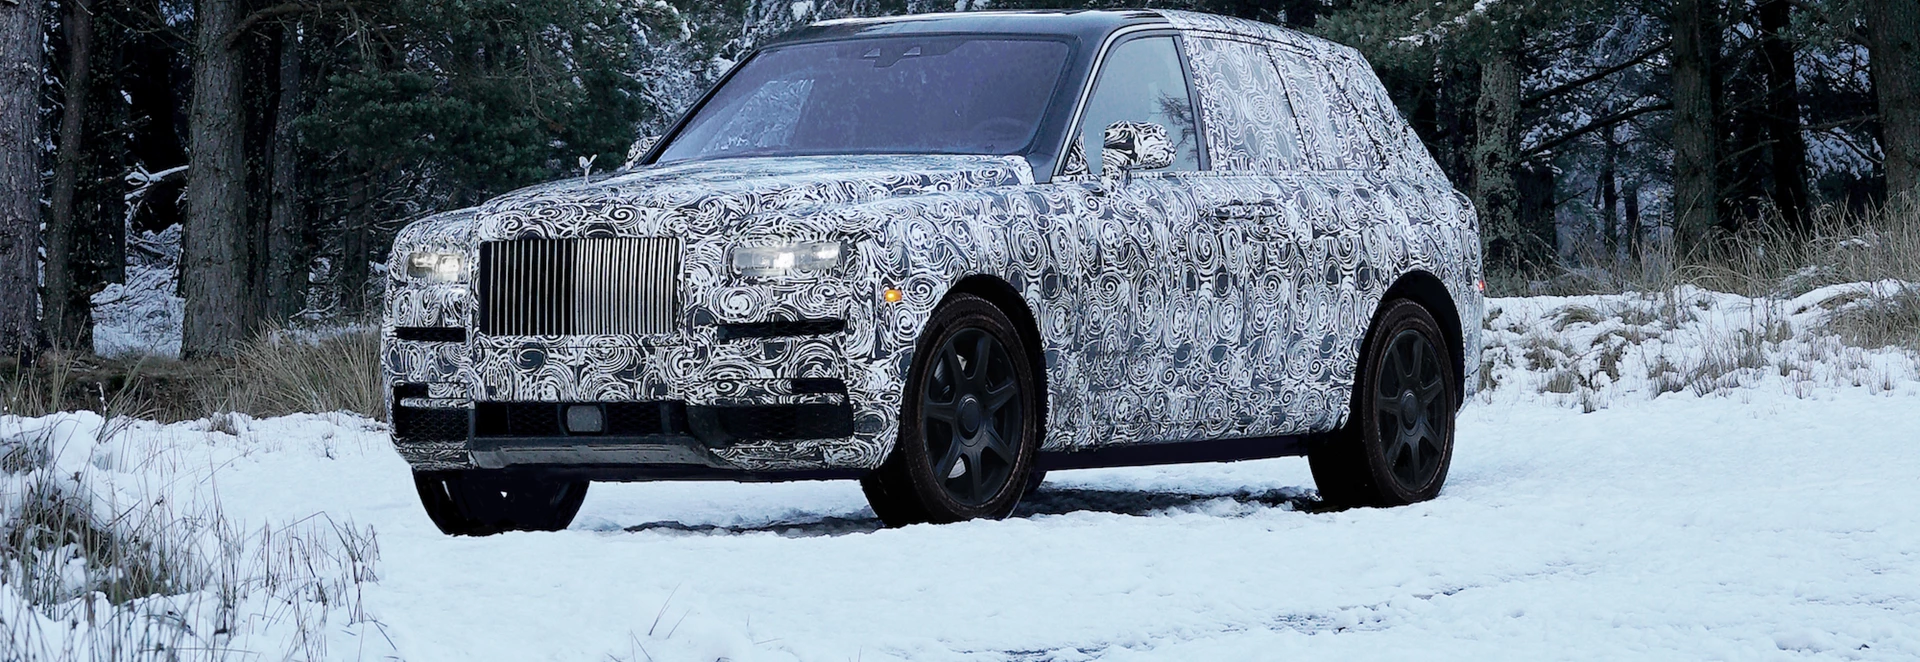 Rolls-Royce names new luxurious SUV Cullinan